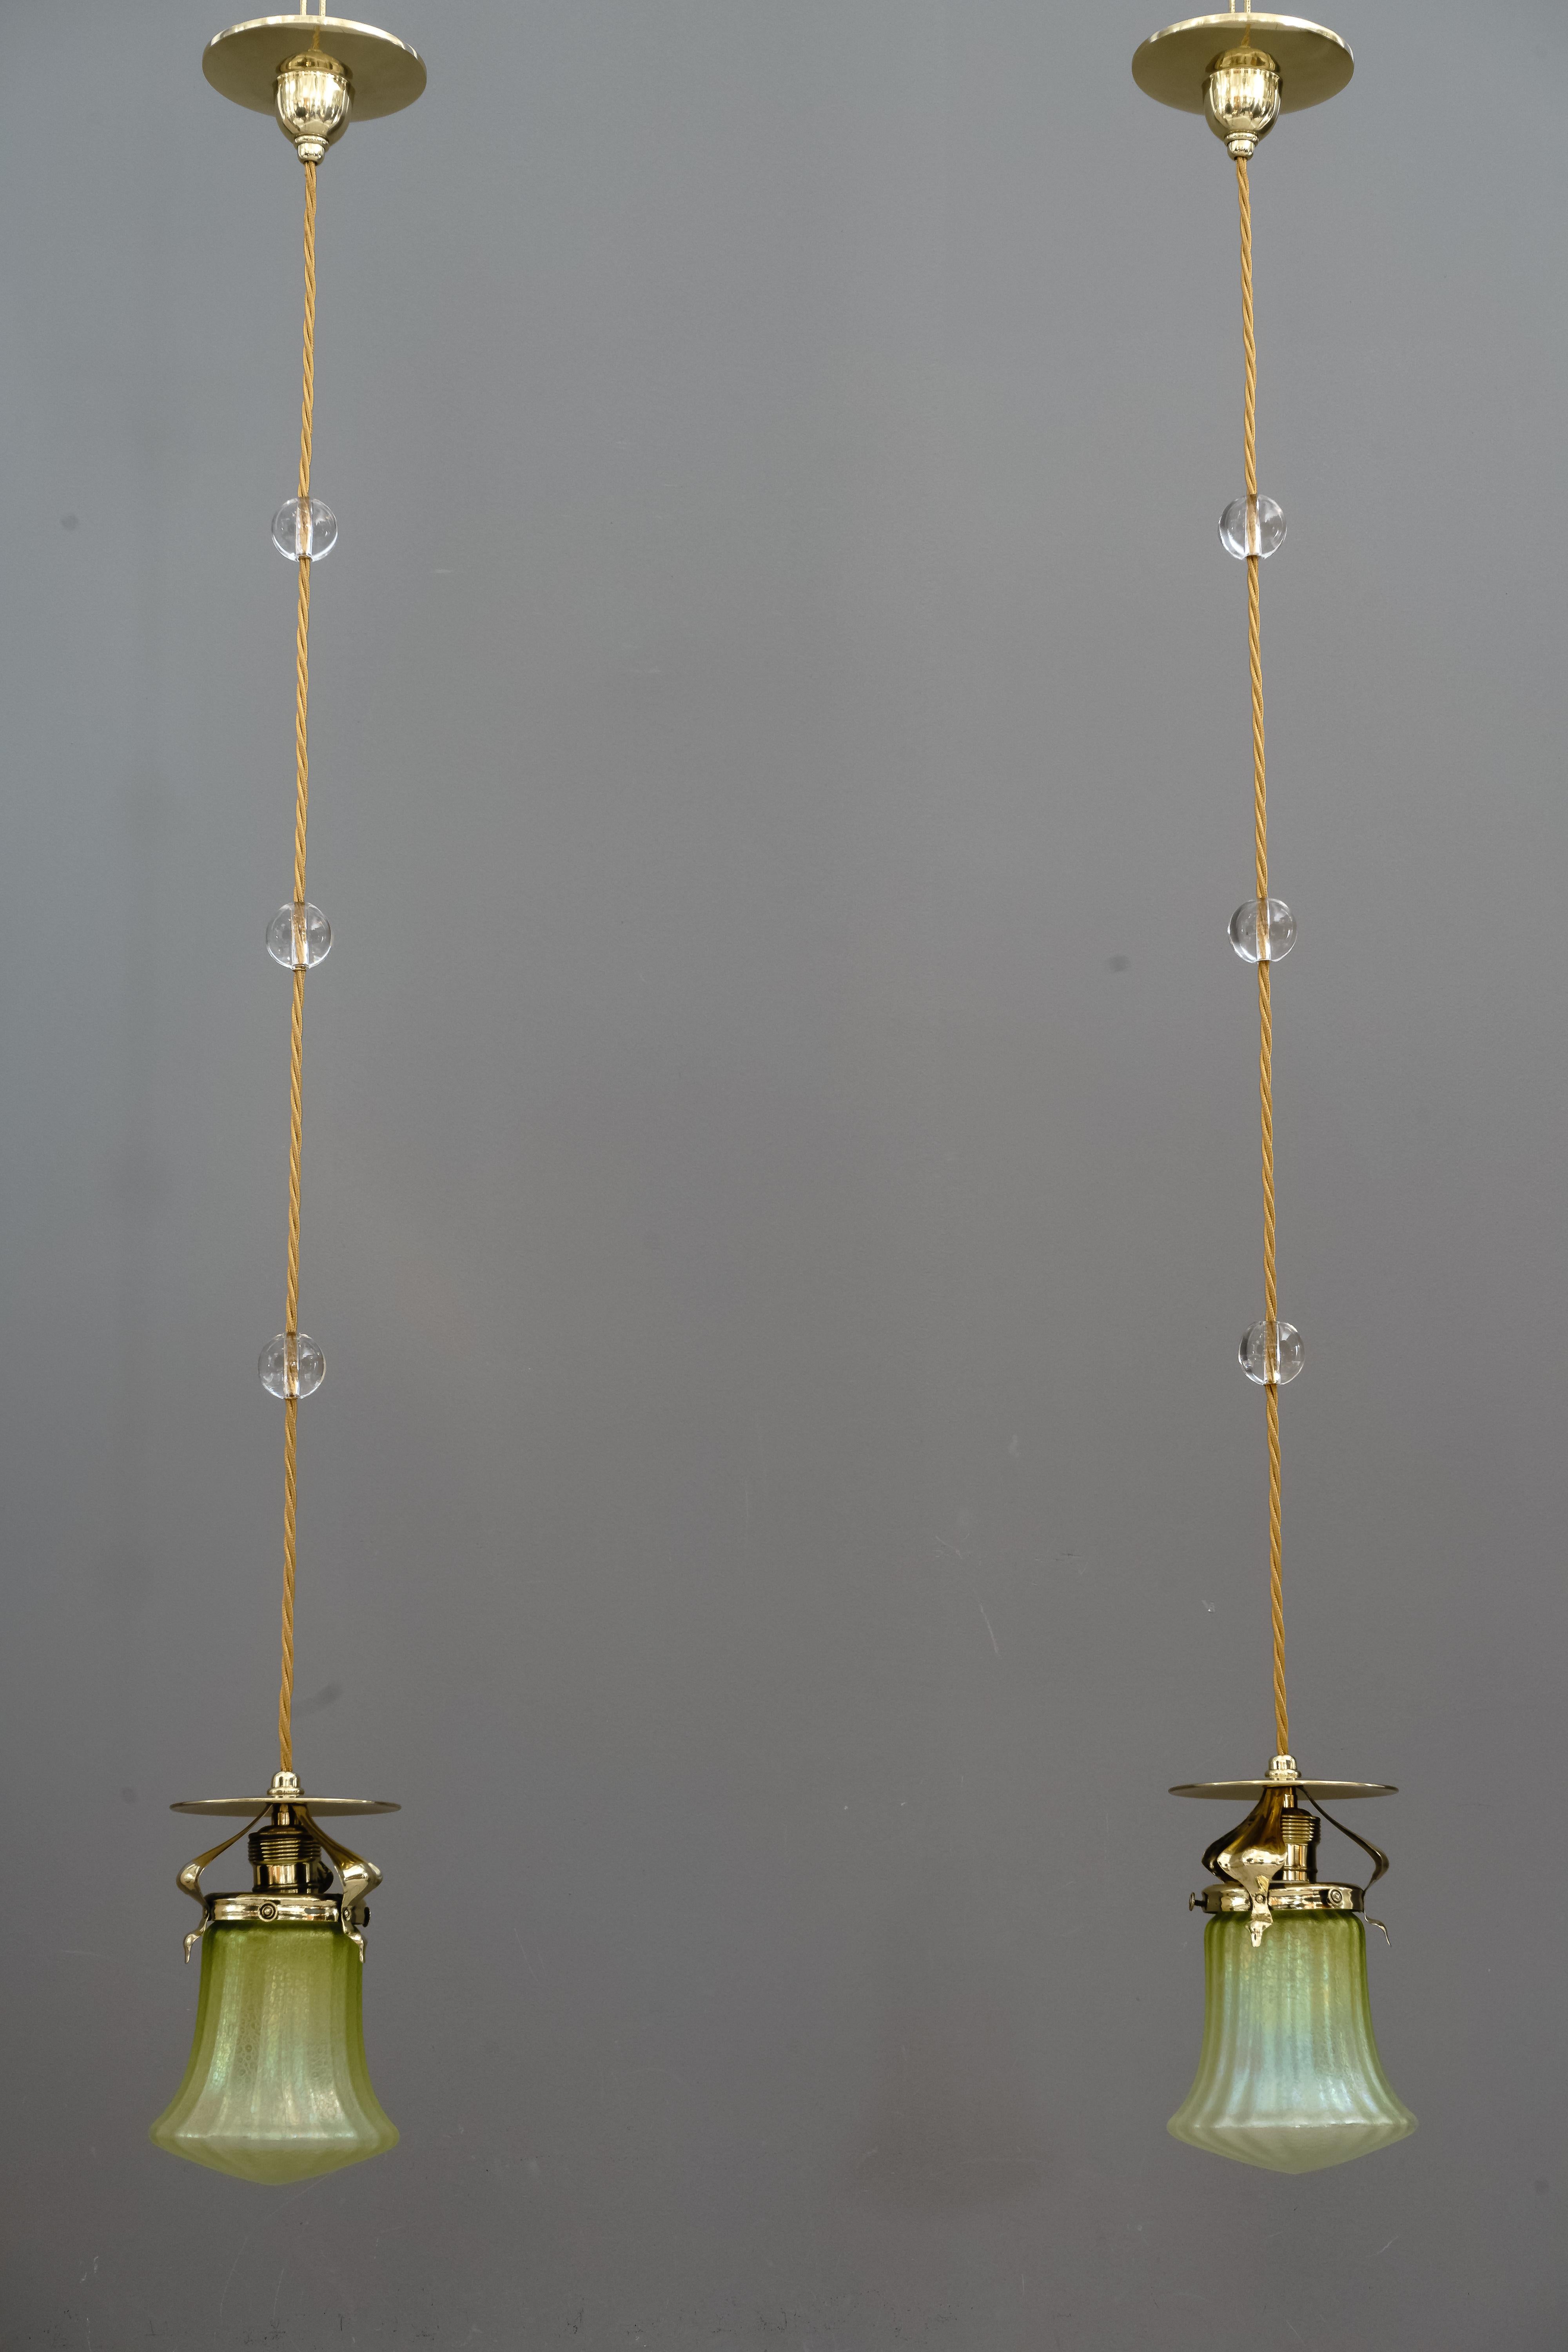 Two Jugendstil pendants, Vienna, circa 1908
Brass polished and stove enamlled
Beautiful original lötz glasses.